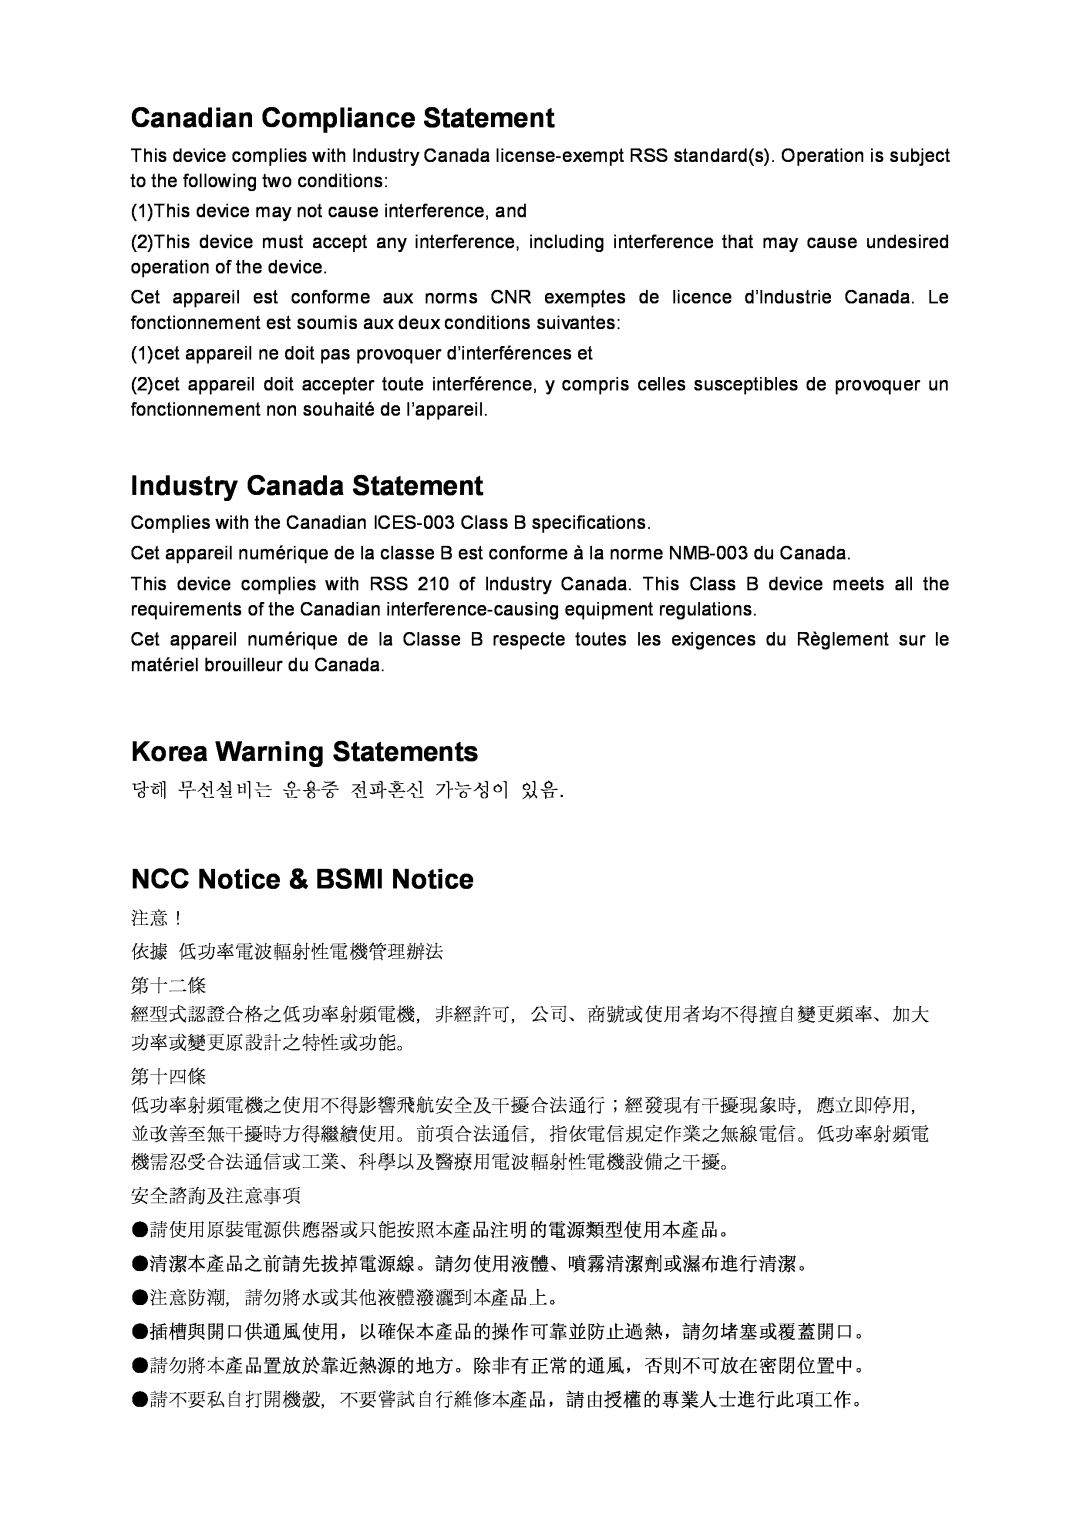 TP-Link TL-WA7210N manual Canadian Compliance Statement, Industry Canada Statement, Korea Warning Statements 